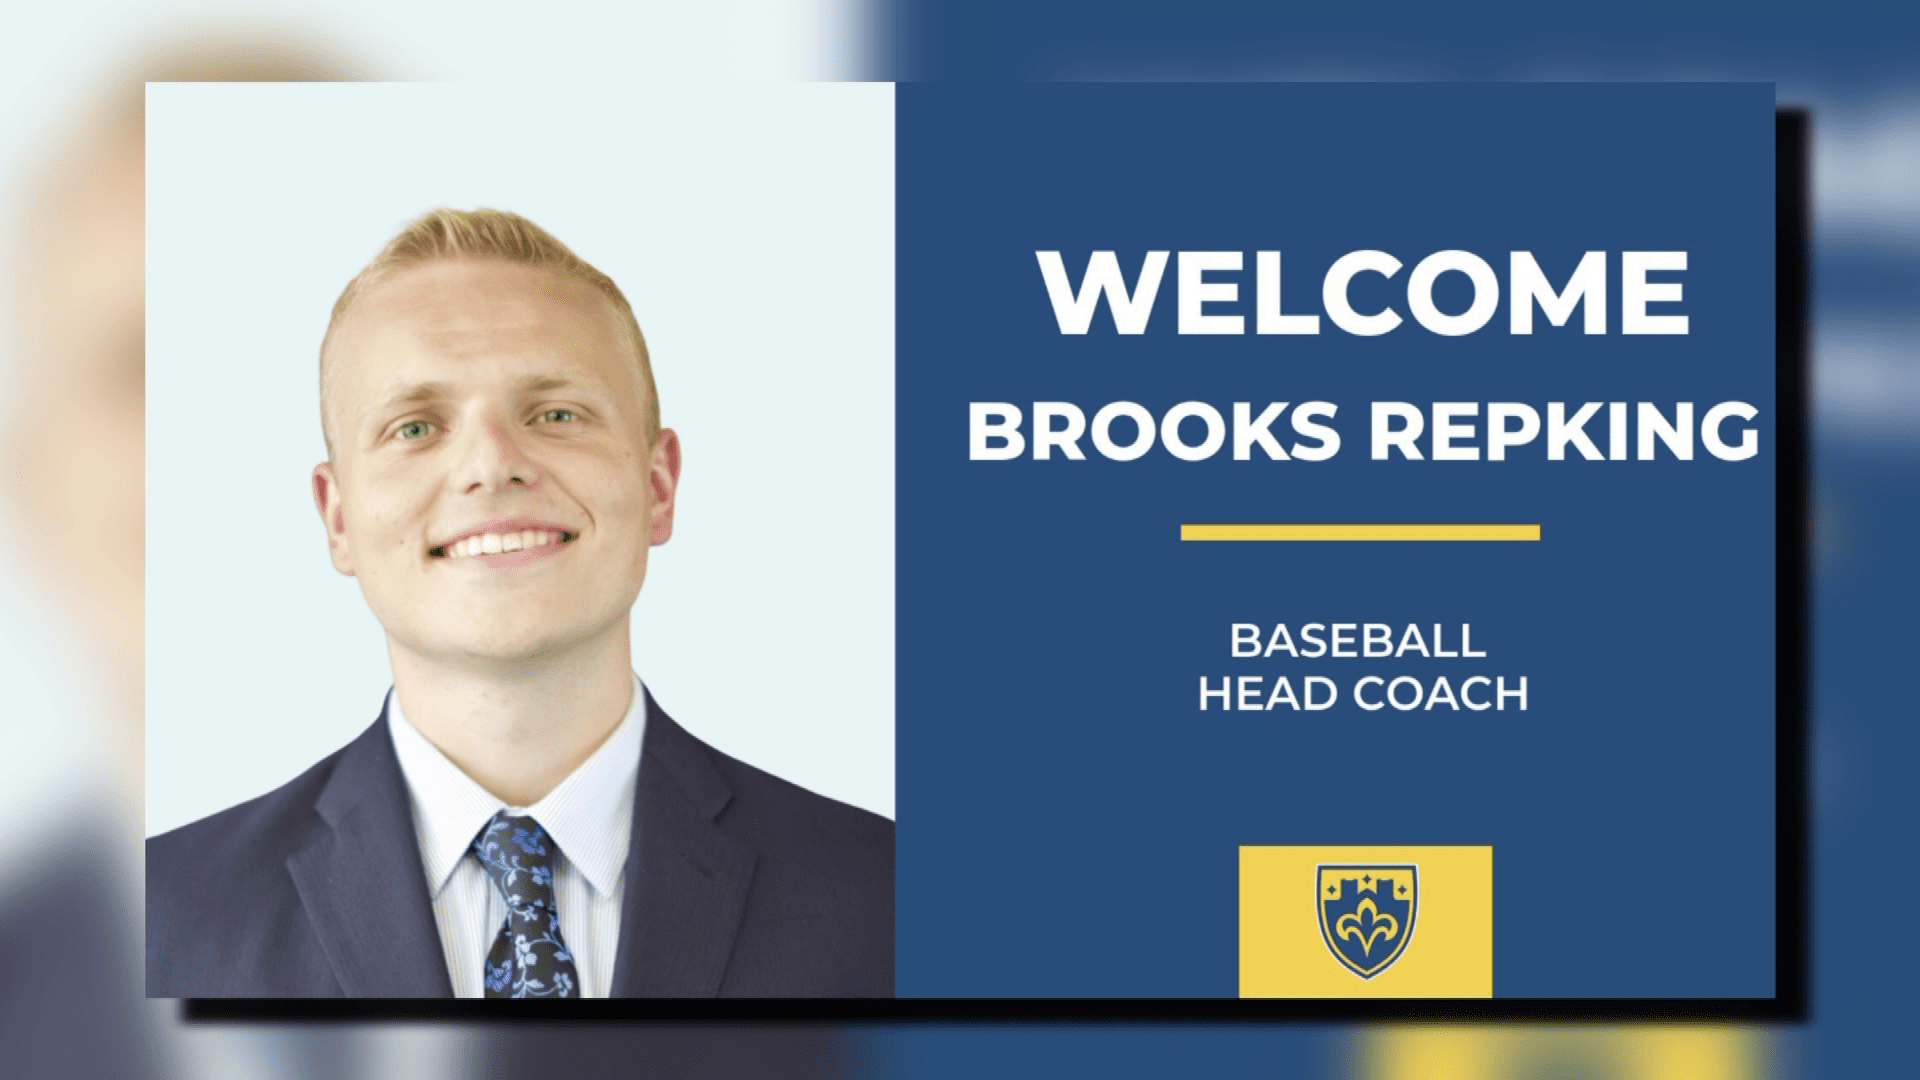 CSS's new baseball coach